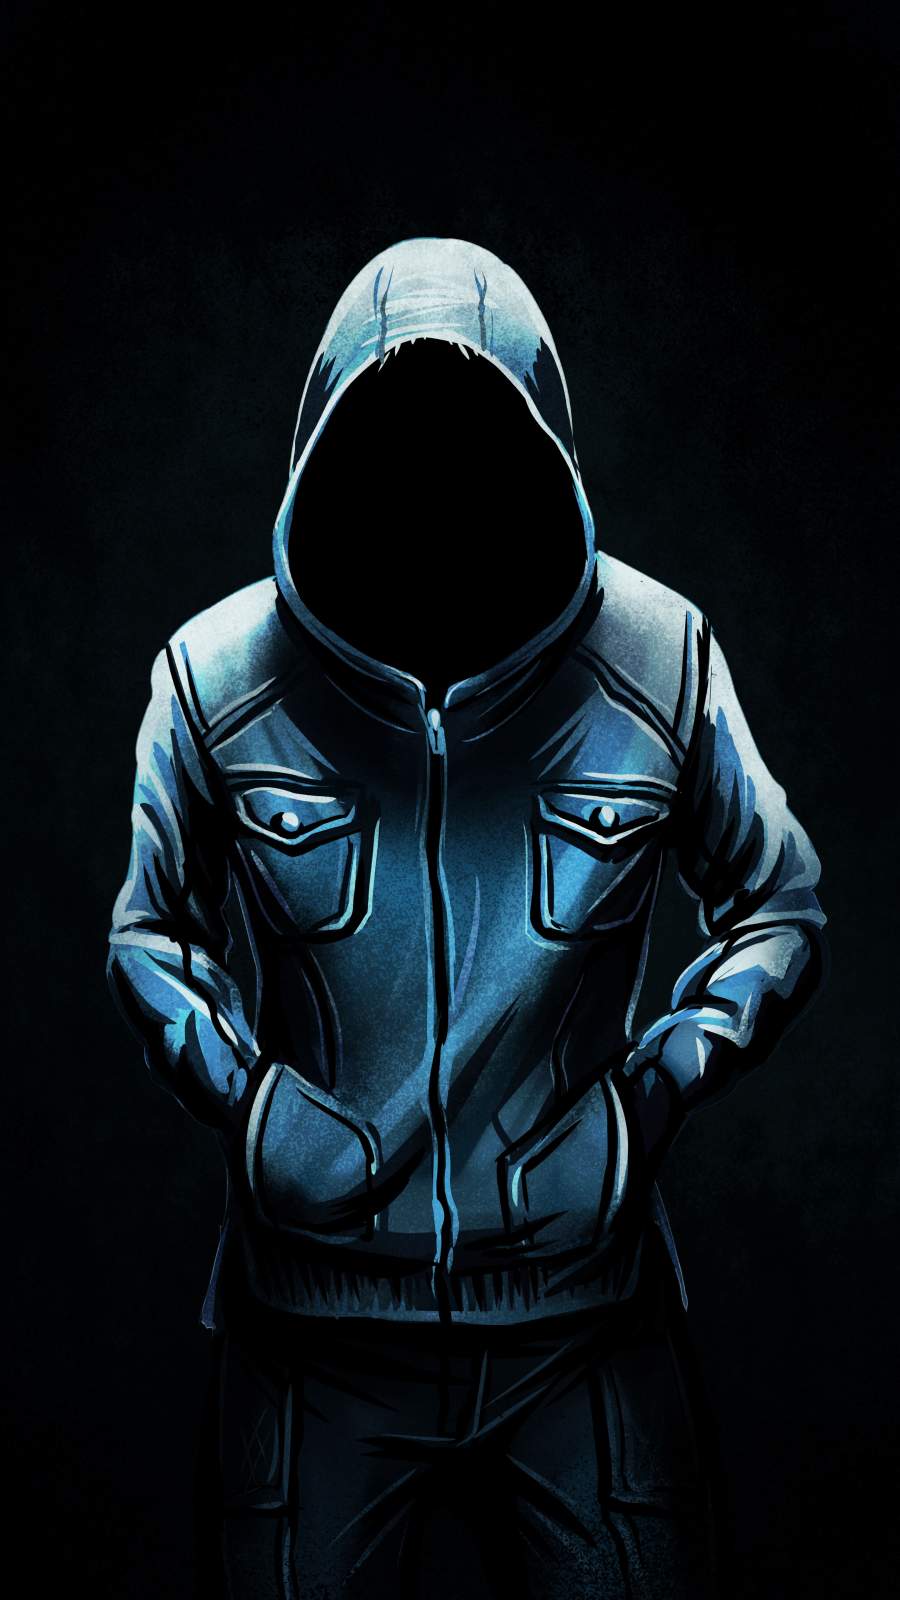 Dark Hoodie Guy Wallpaper, iPhone Wallpaper